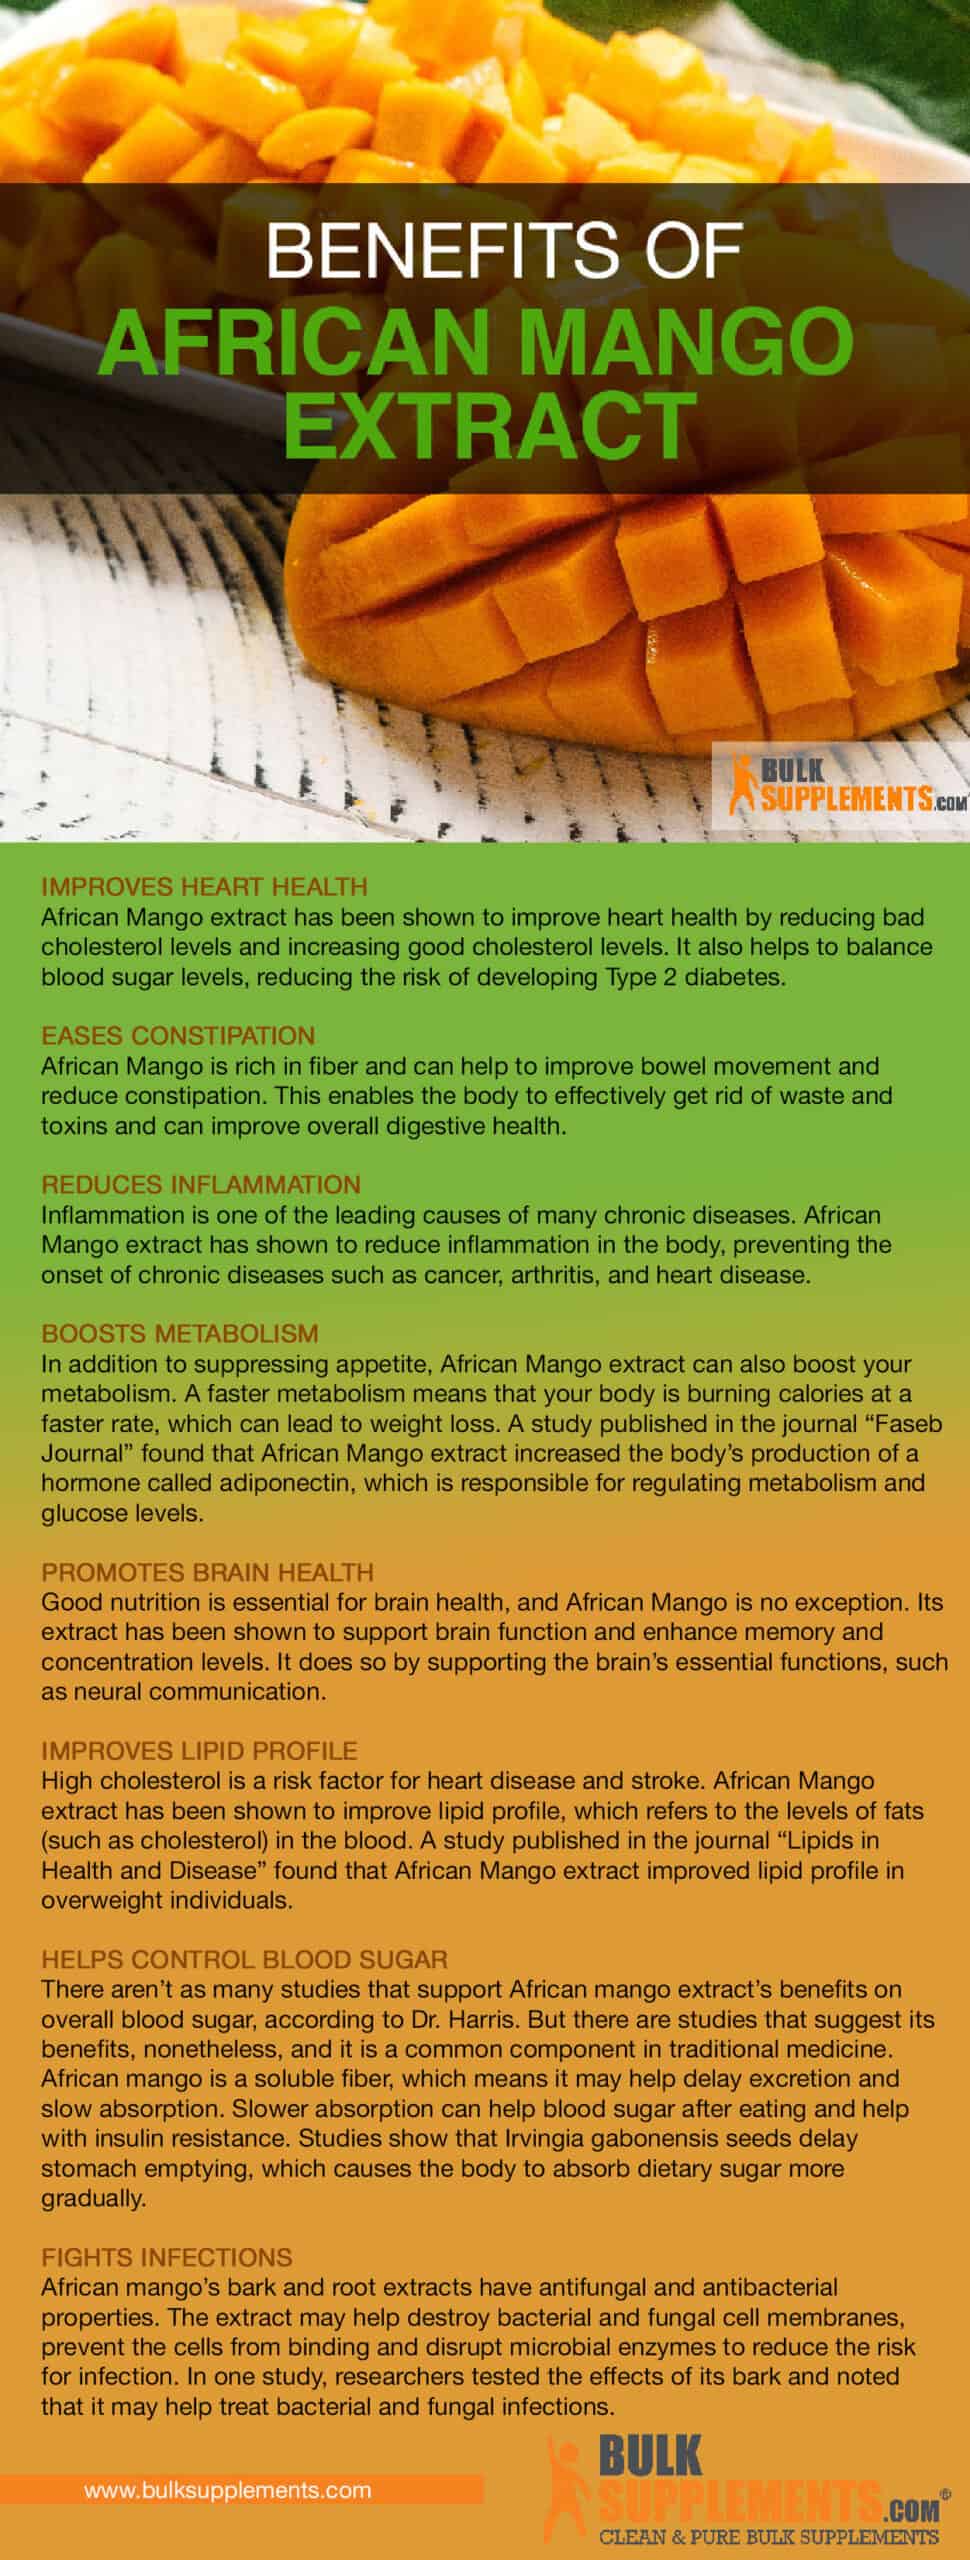 African mango extract health benefits